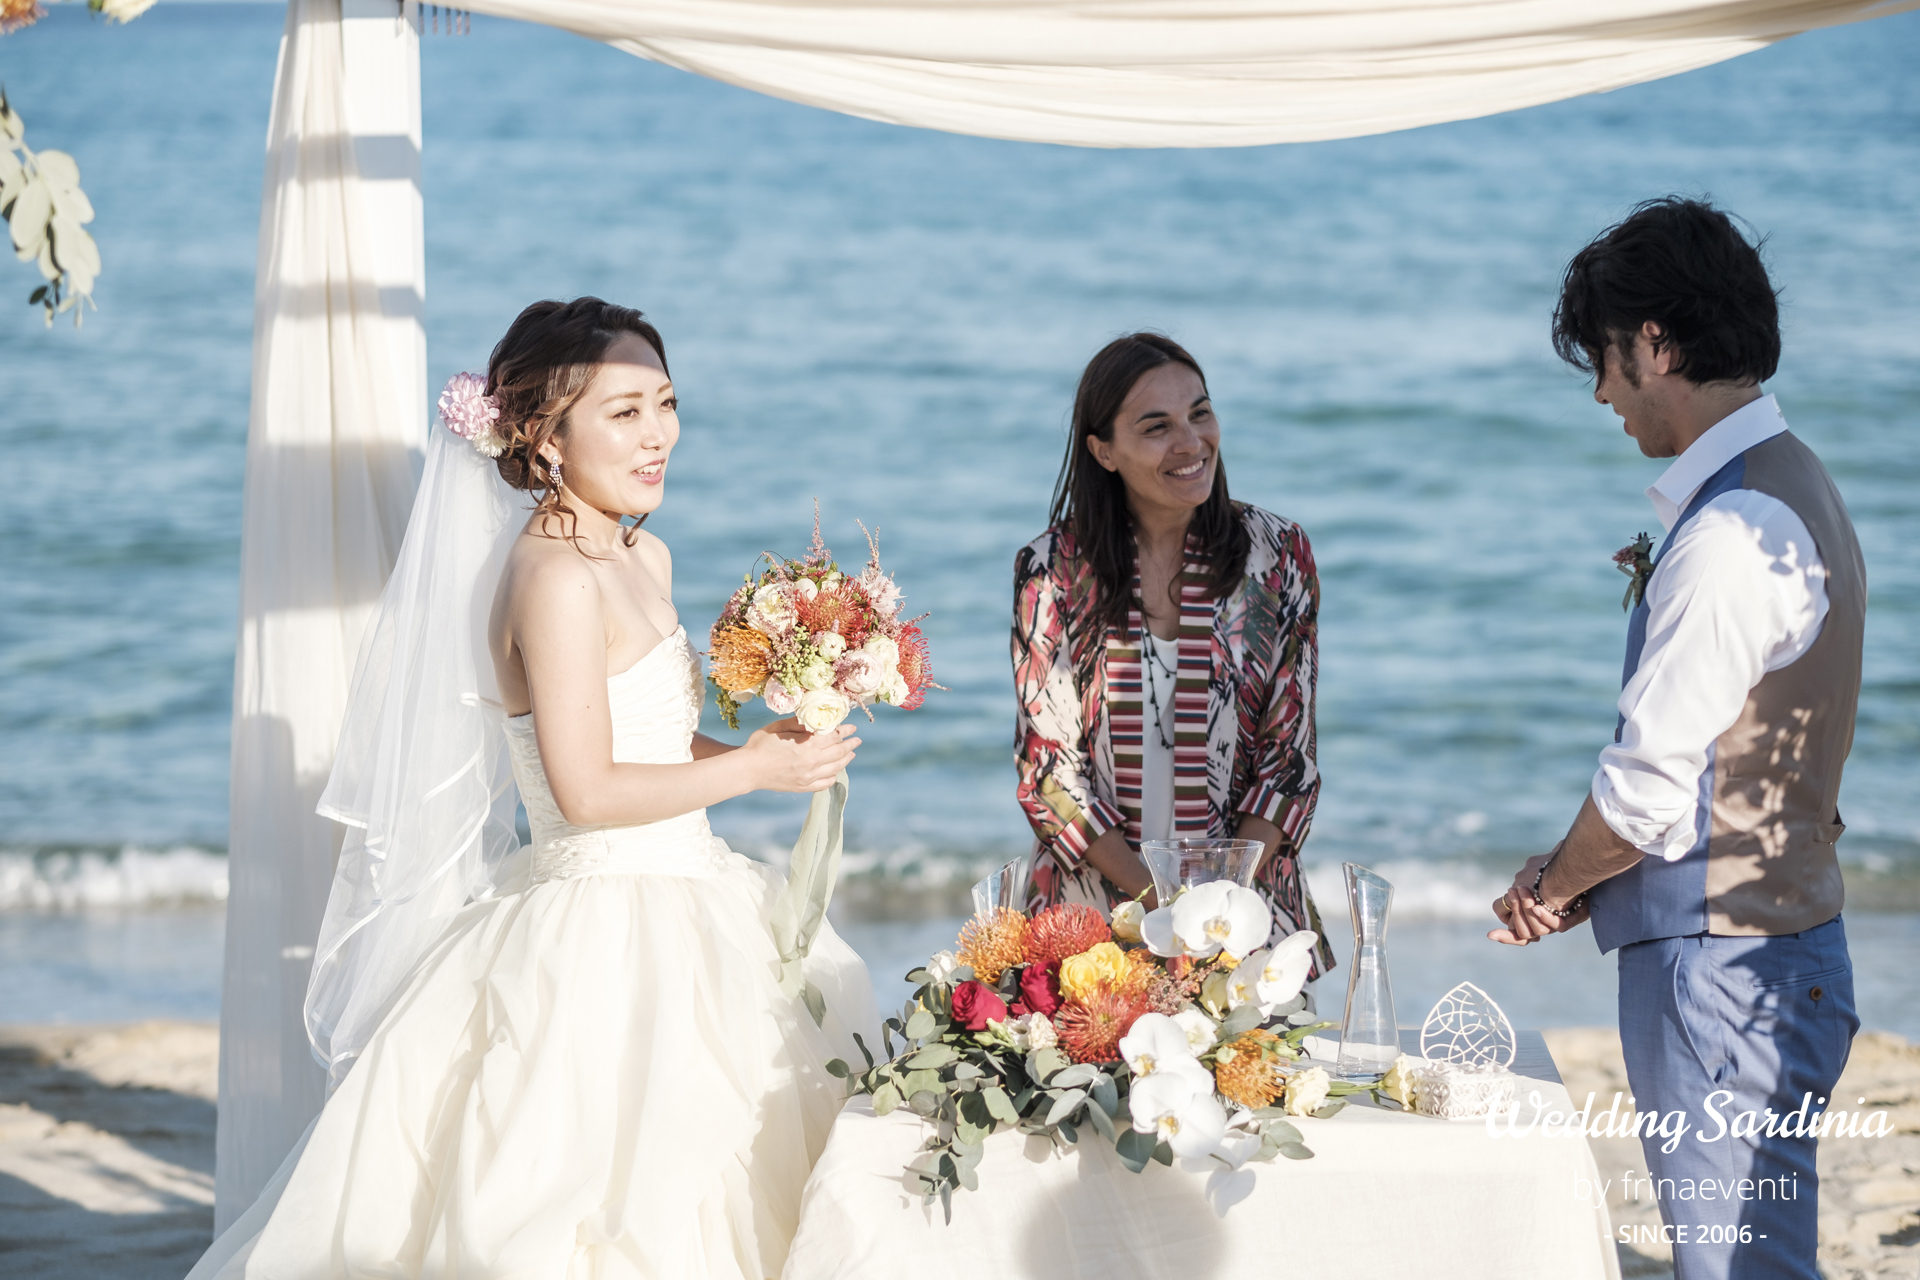 Japanese beach wedding costarei